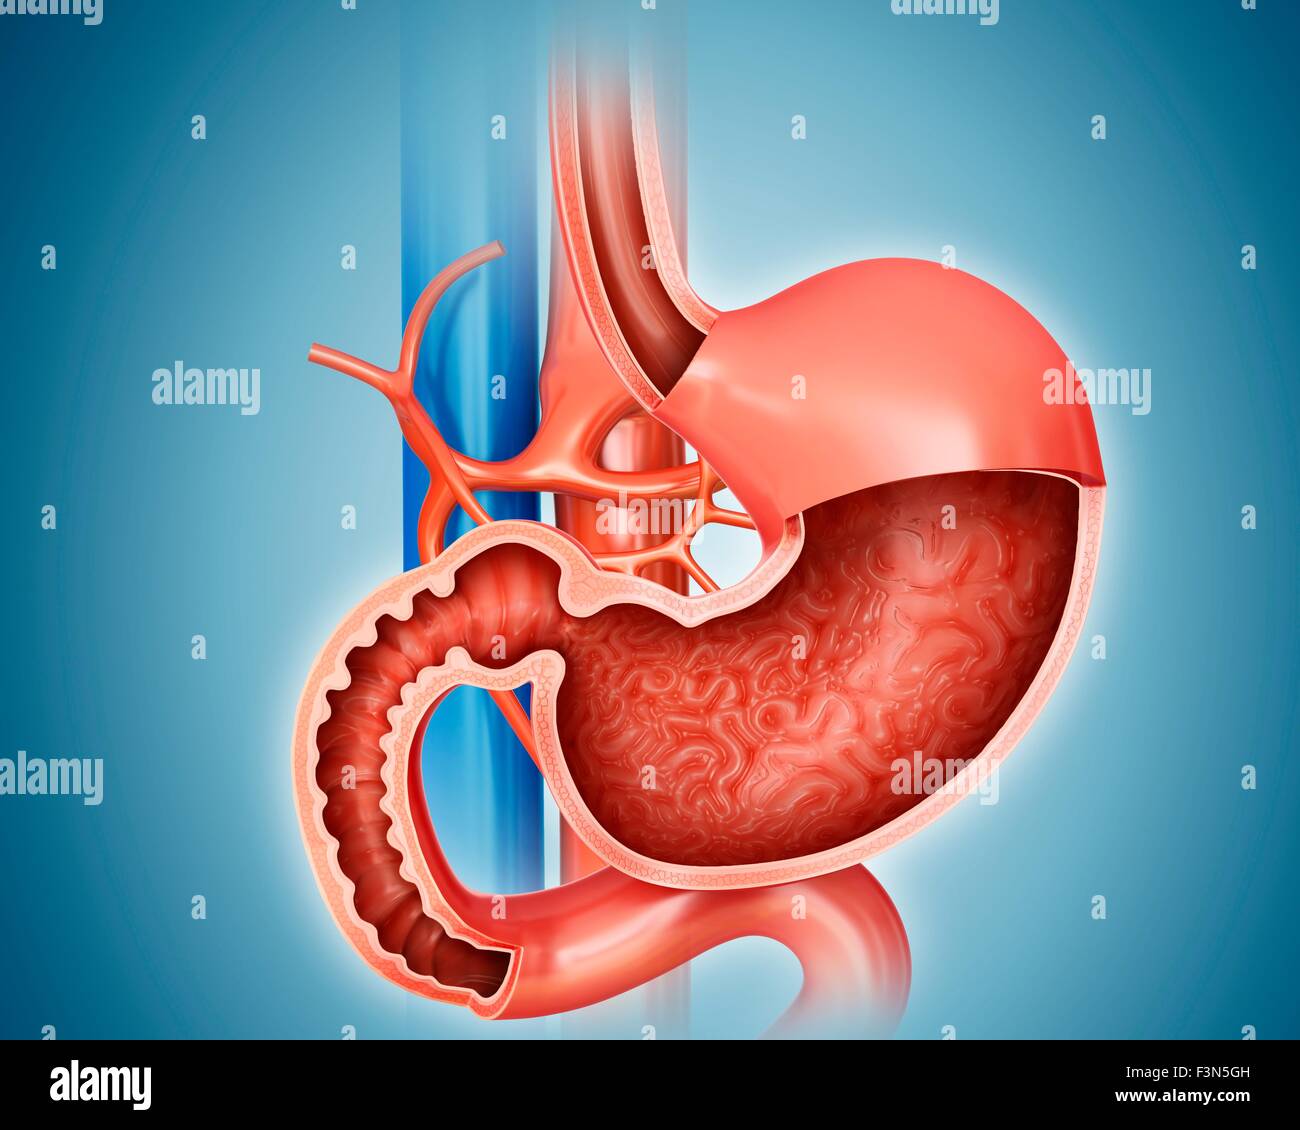 Stomach and small intestine, illustration Stock Photo - Alamy